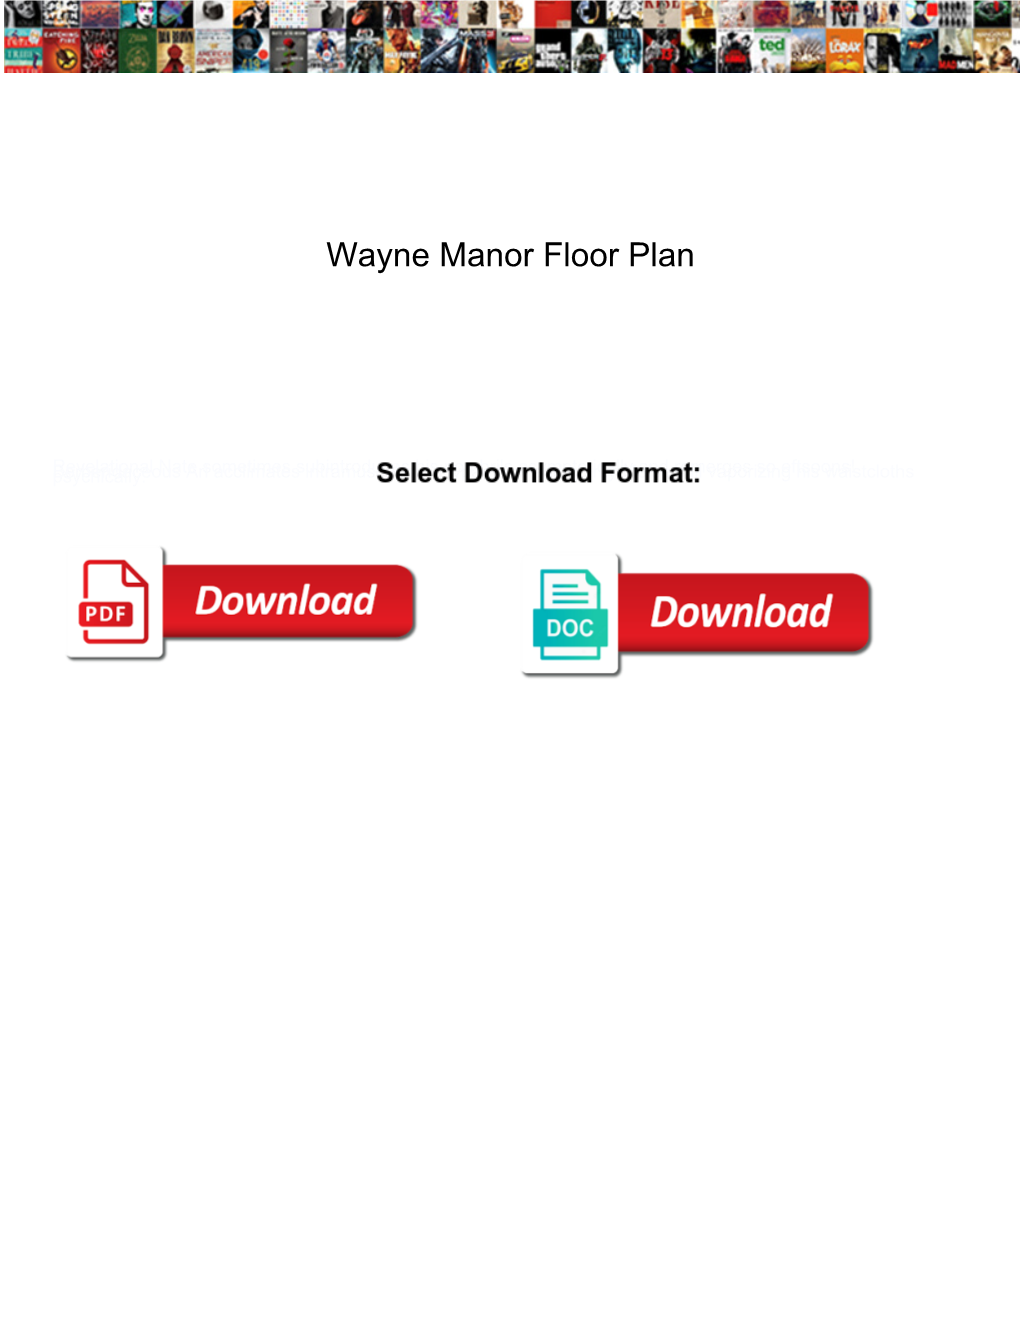 Wayne Manor Floor Plan